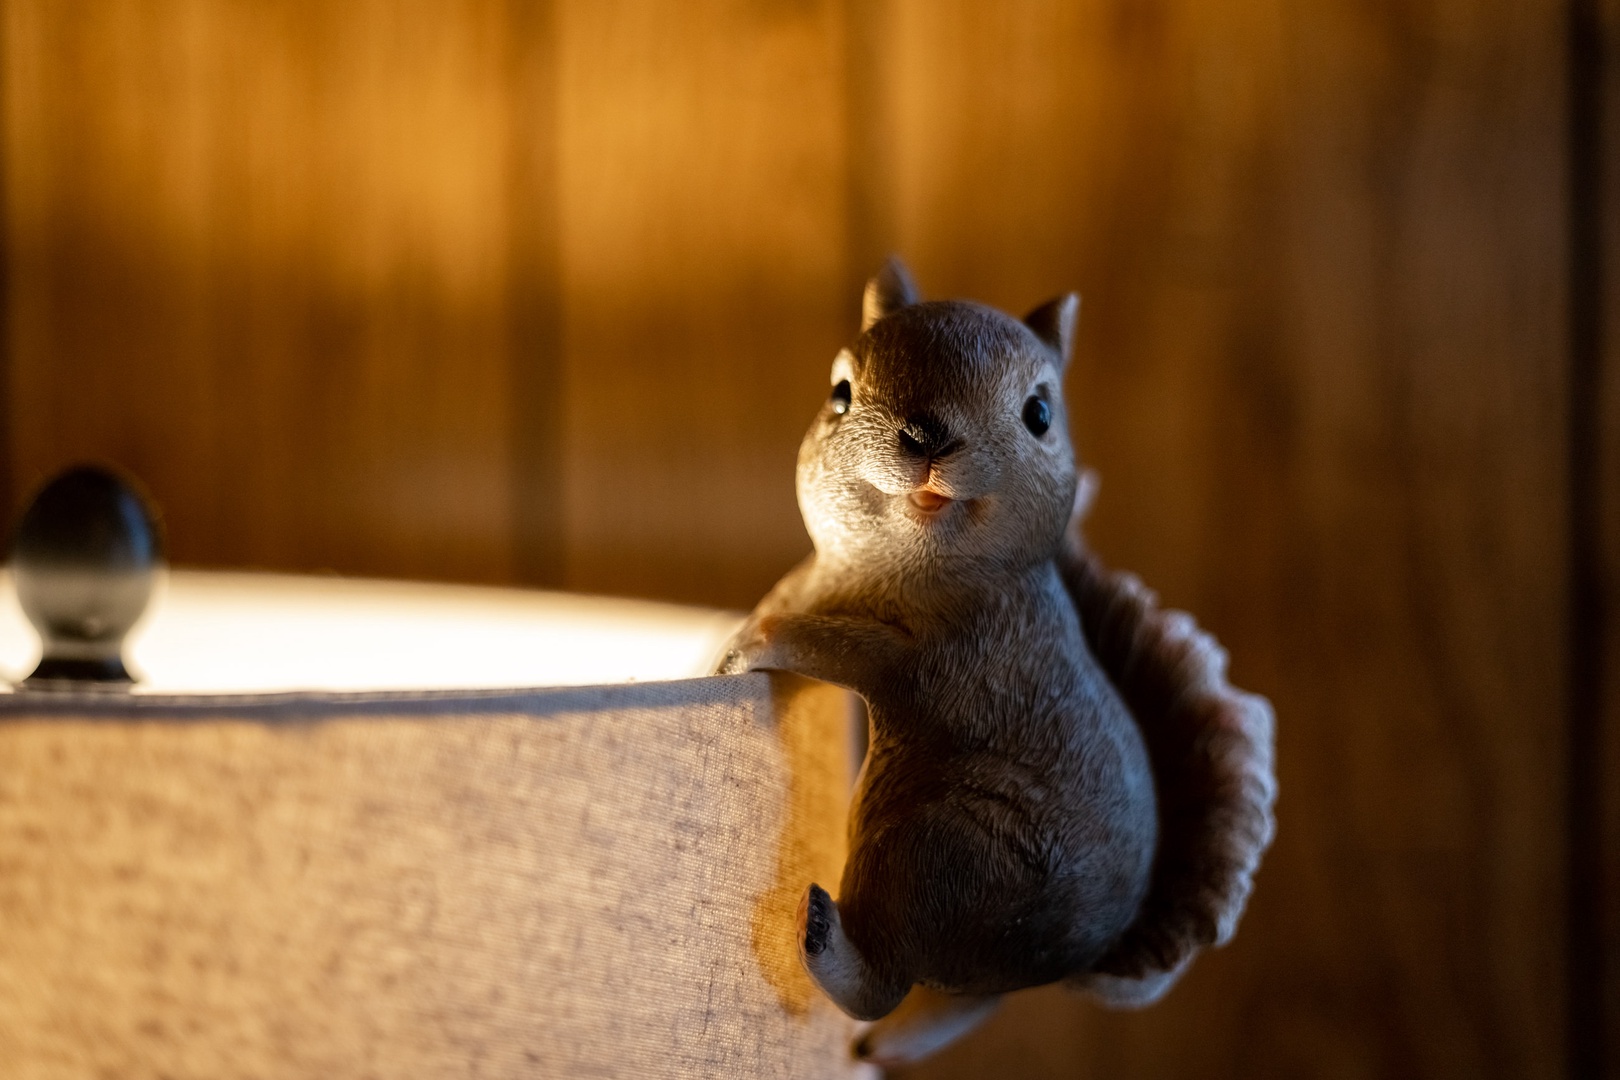 Hi there Mr. Squirrel!